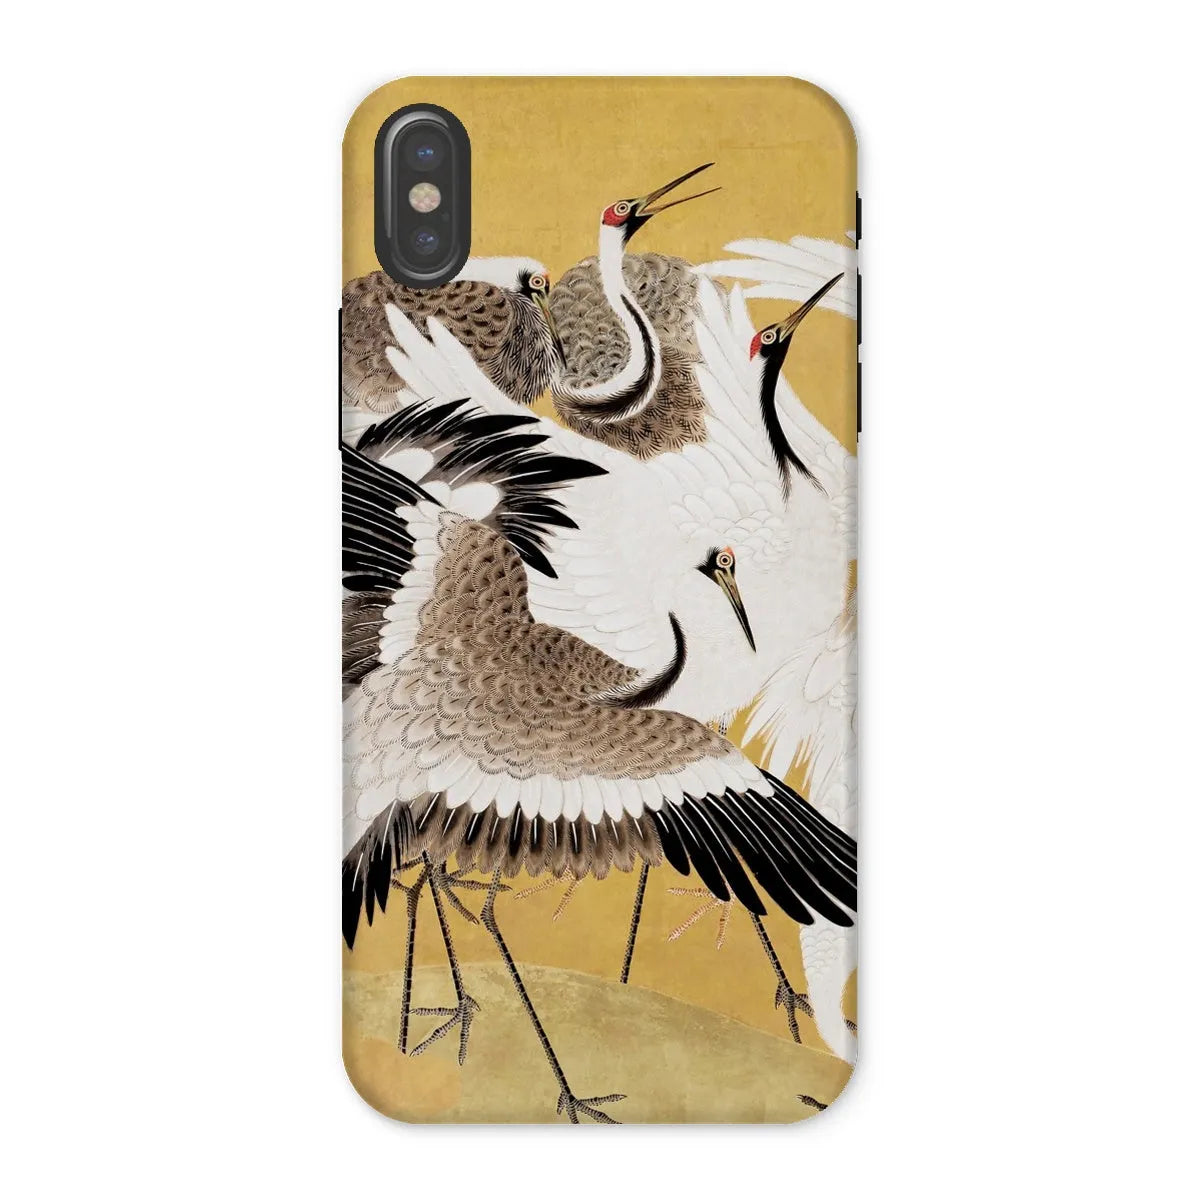 Flock Of Cranes Japanese Bird Art Phone Case - Ishida Yūtei - Iphone x / Matte - Mobile Phone Cases - Aesthetic Art